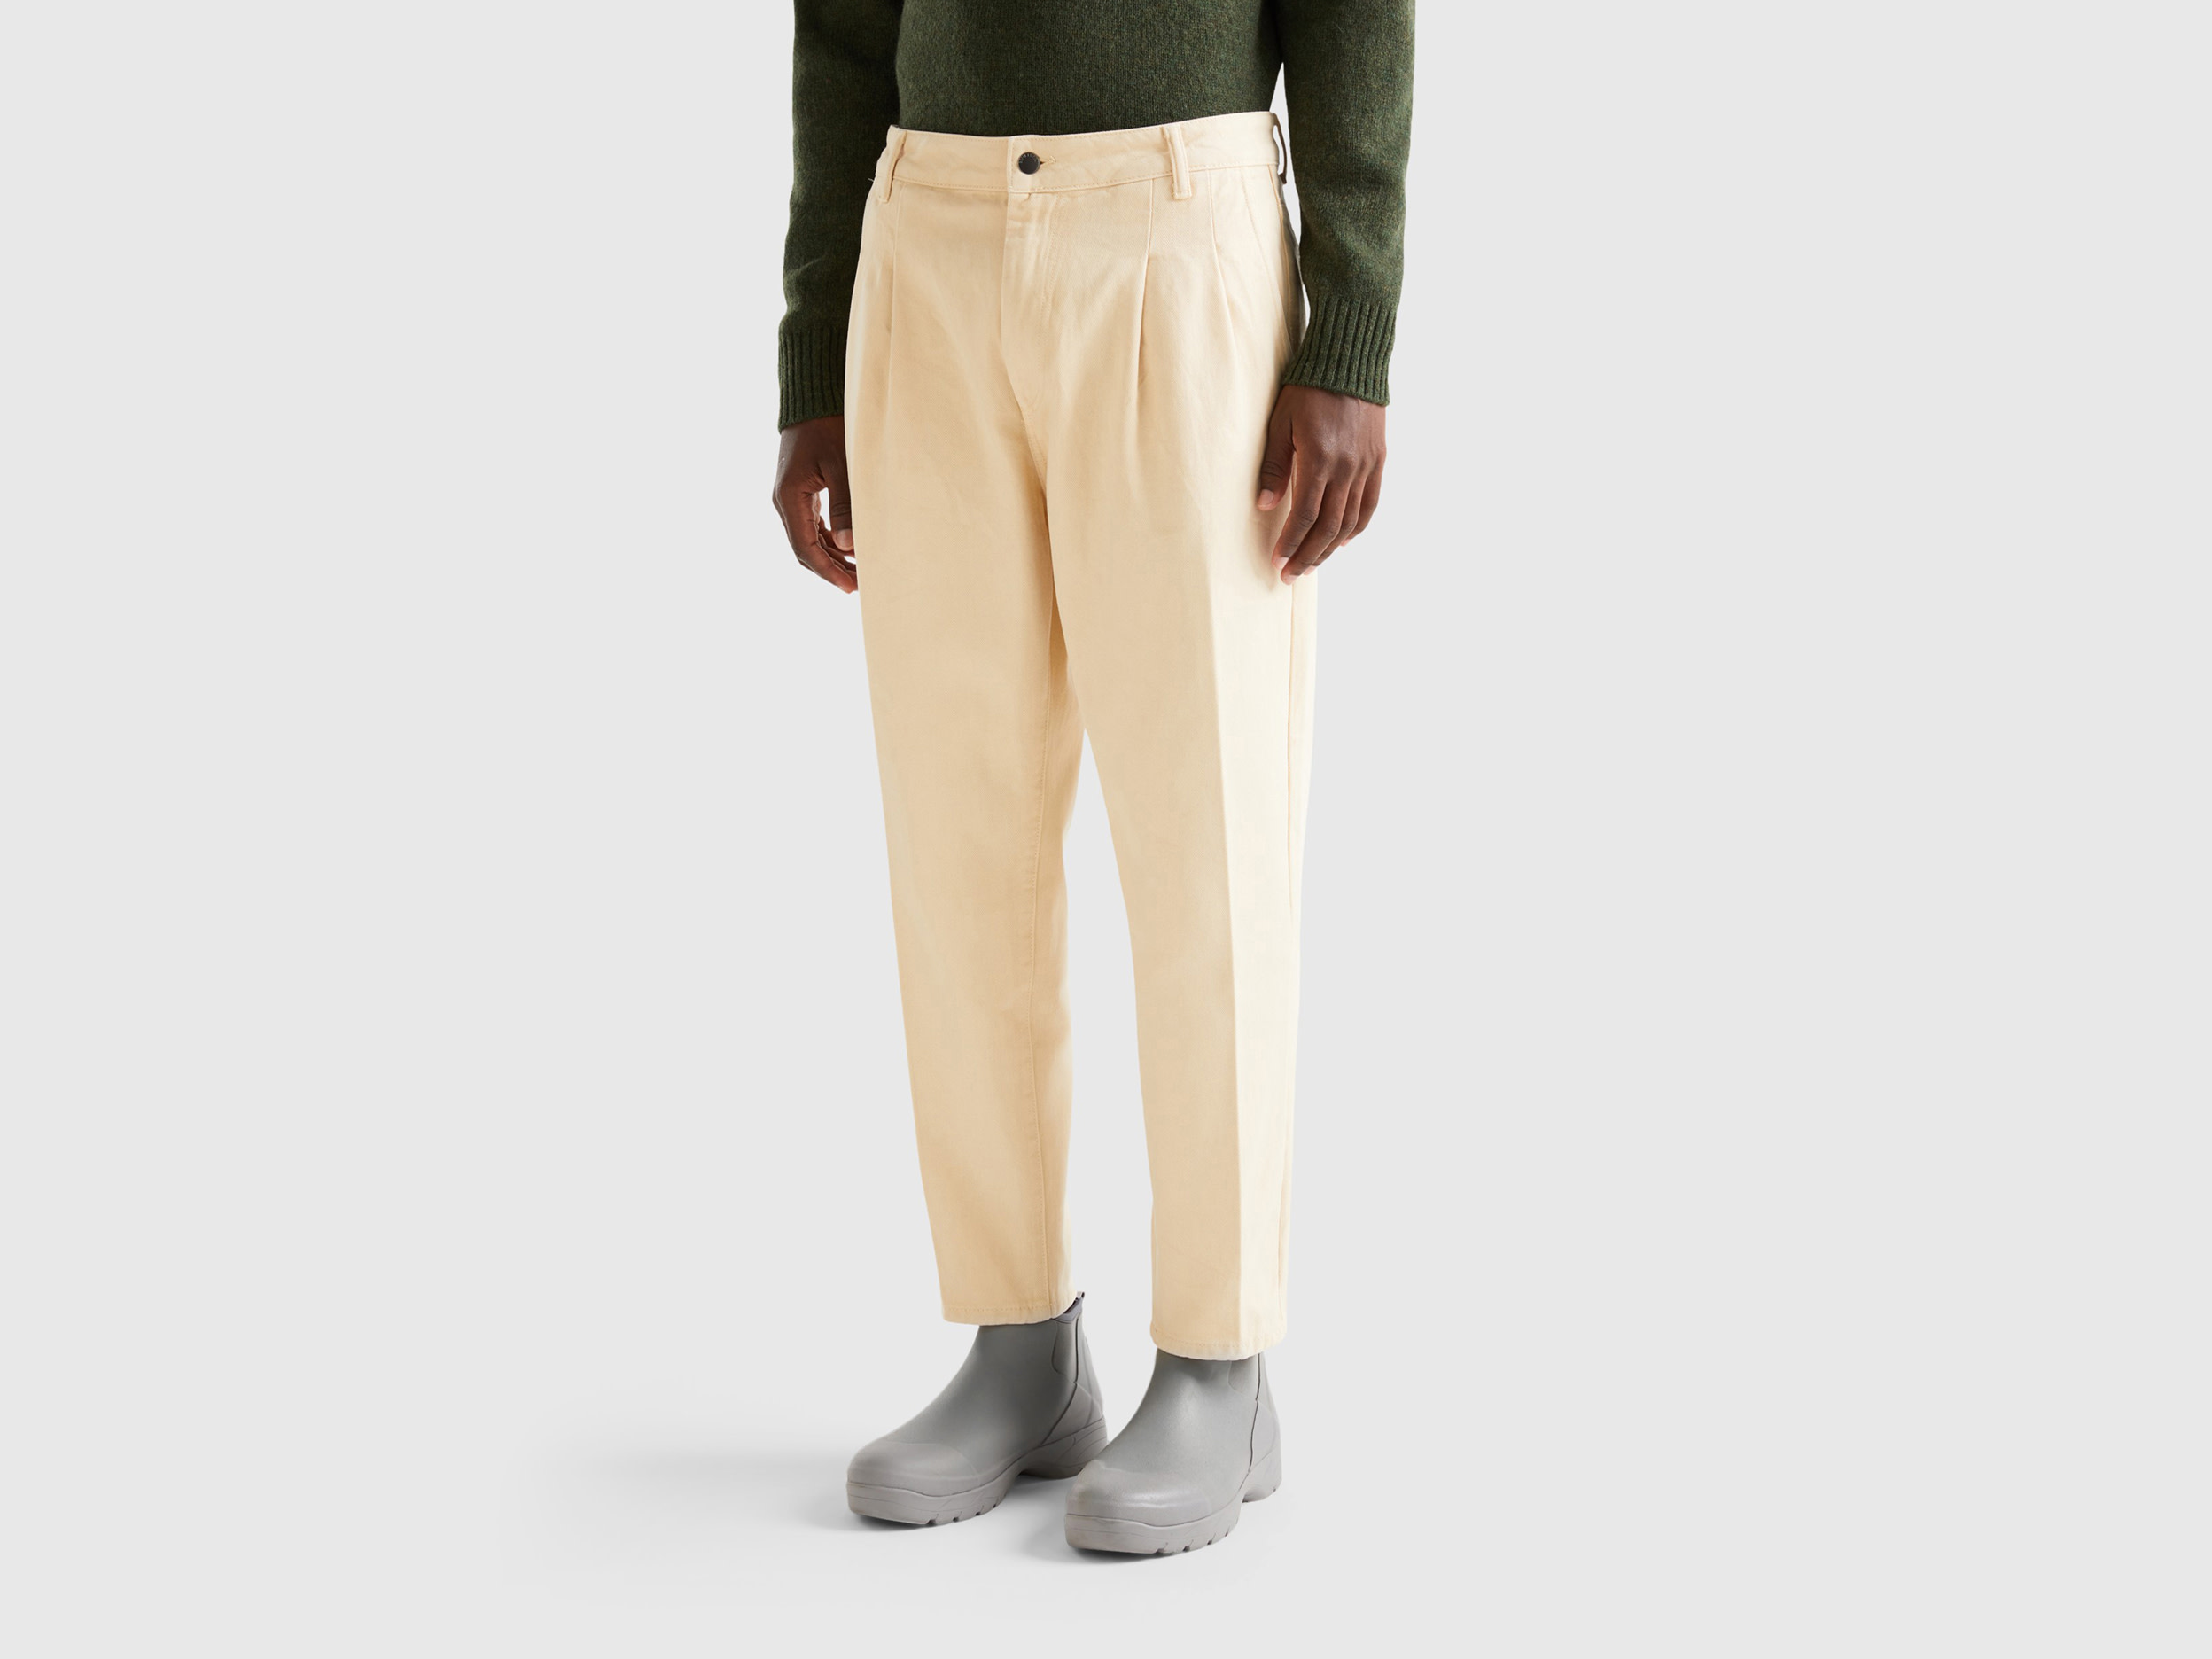 Benetton, Trousers In Cotton With Pleats, size 38, Beige, Men